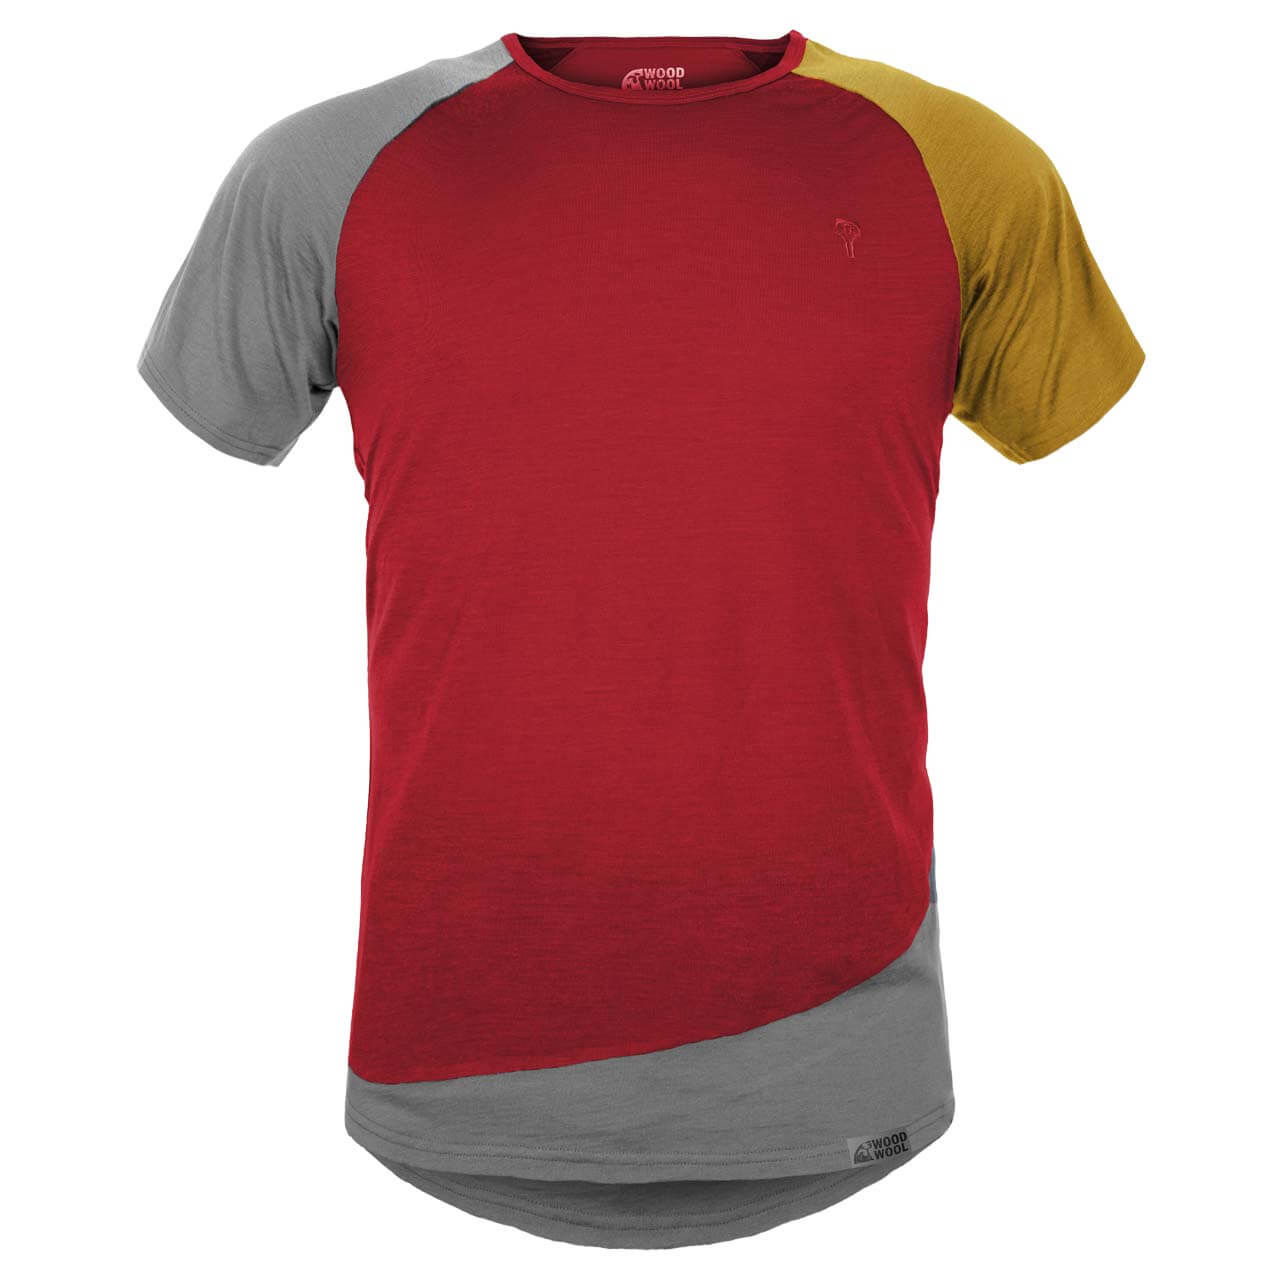 Grüezi Bag WoodWool T-Shirt Mr. Kirk - Fired Red Brick, L von Grüezi Bag}